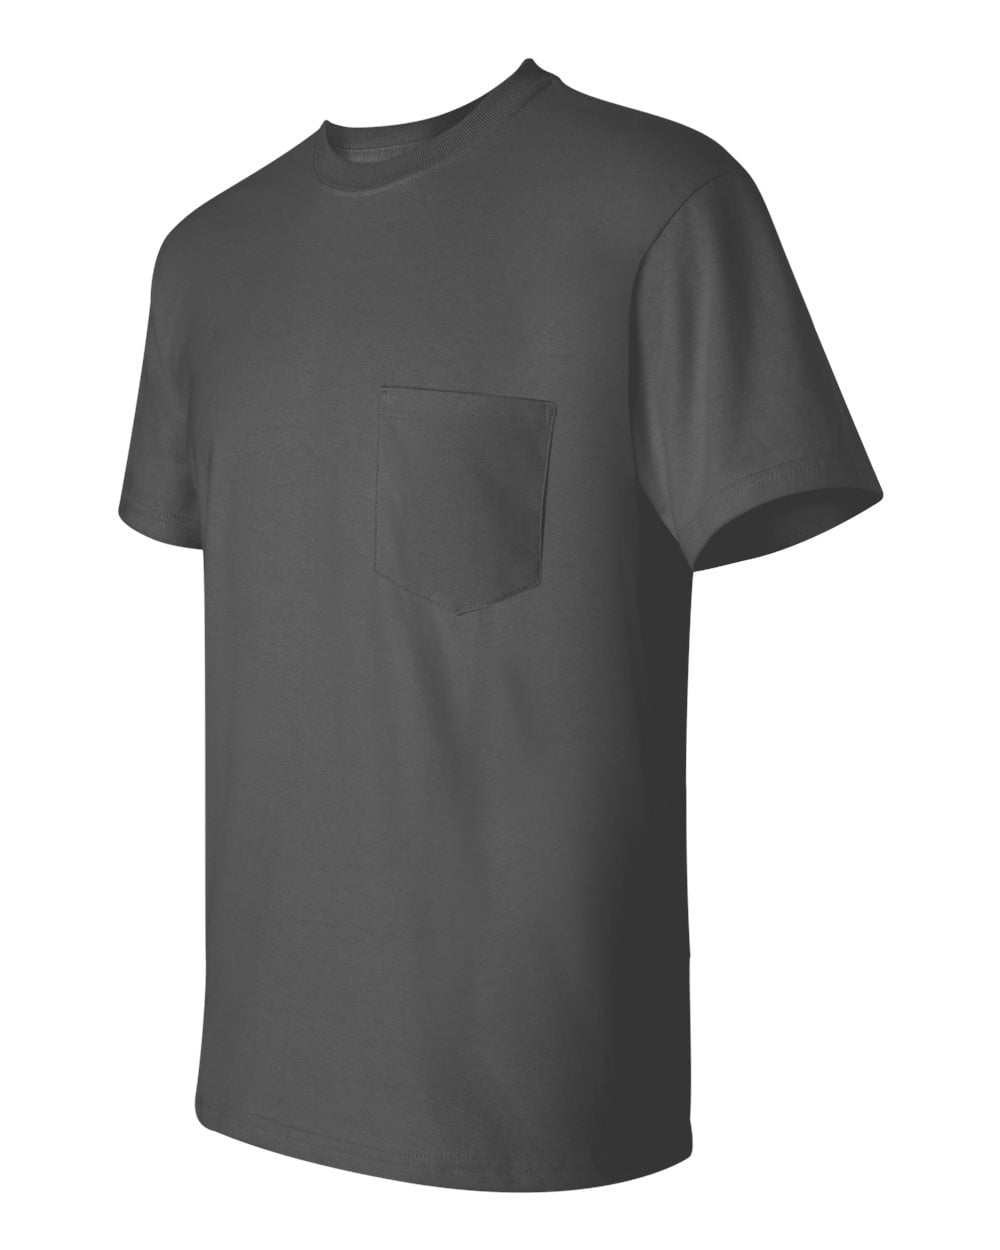 Adult Ultra CottonÂ® Pocket T-Shirt - WHITE - M 